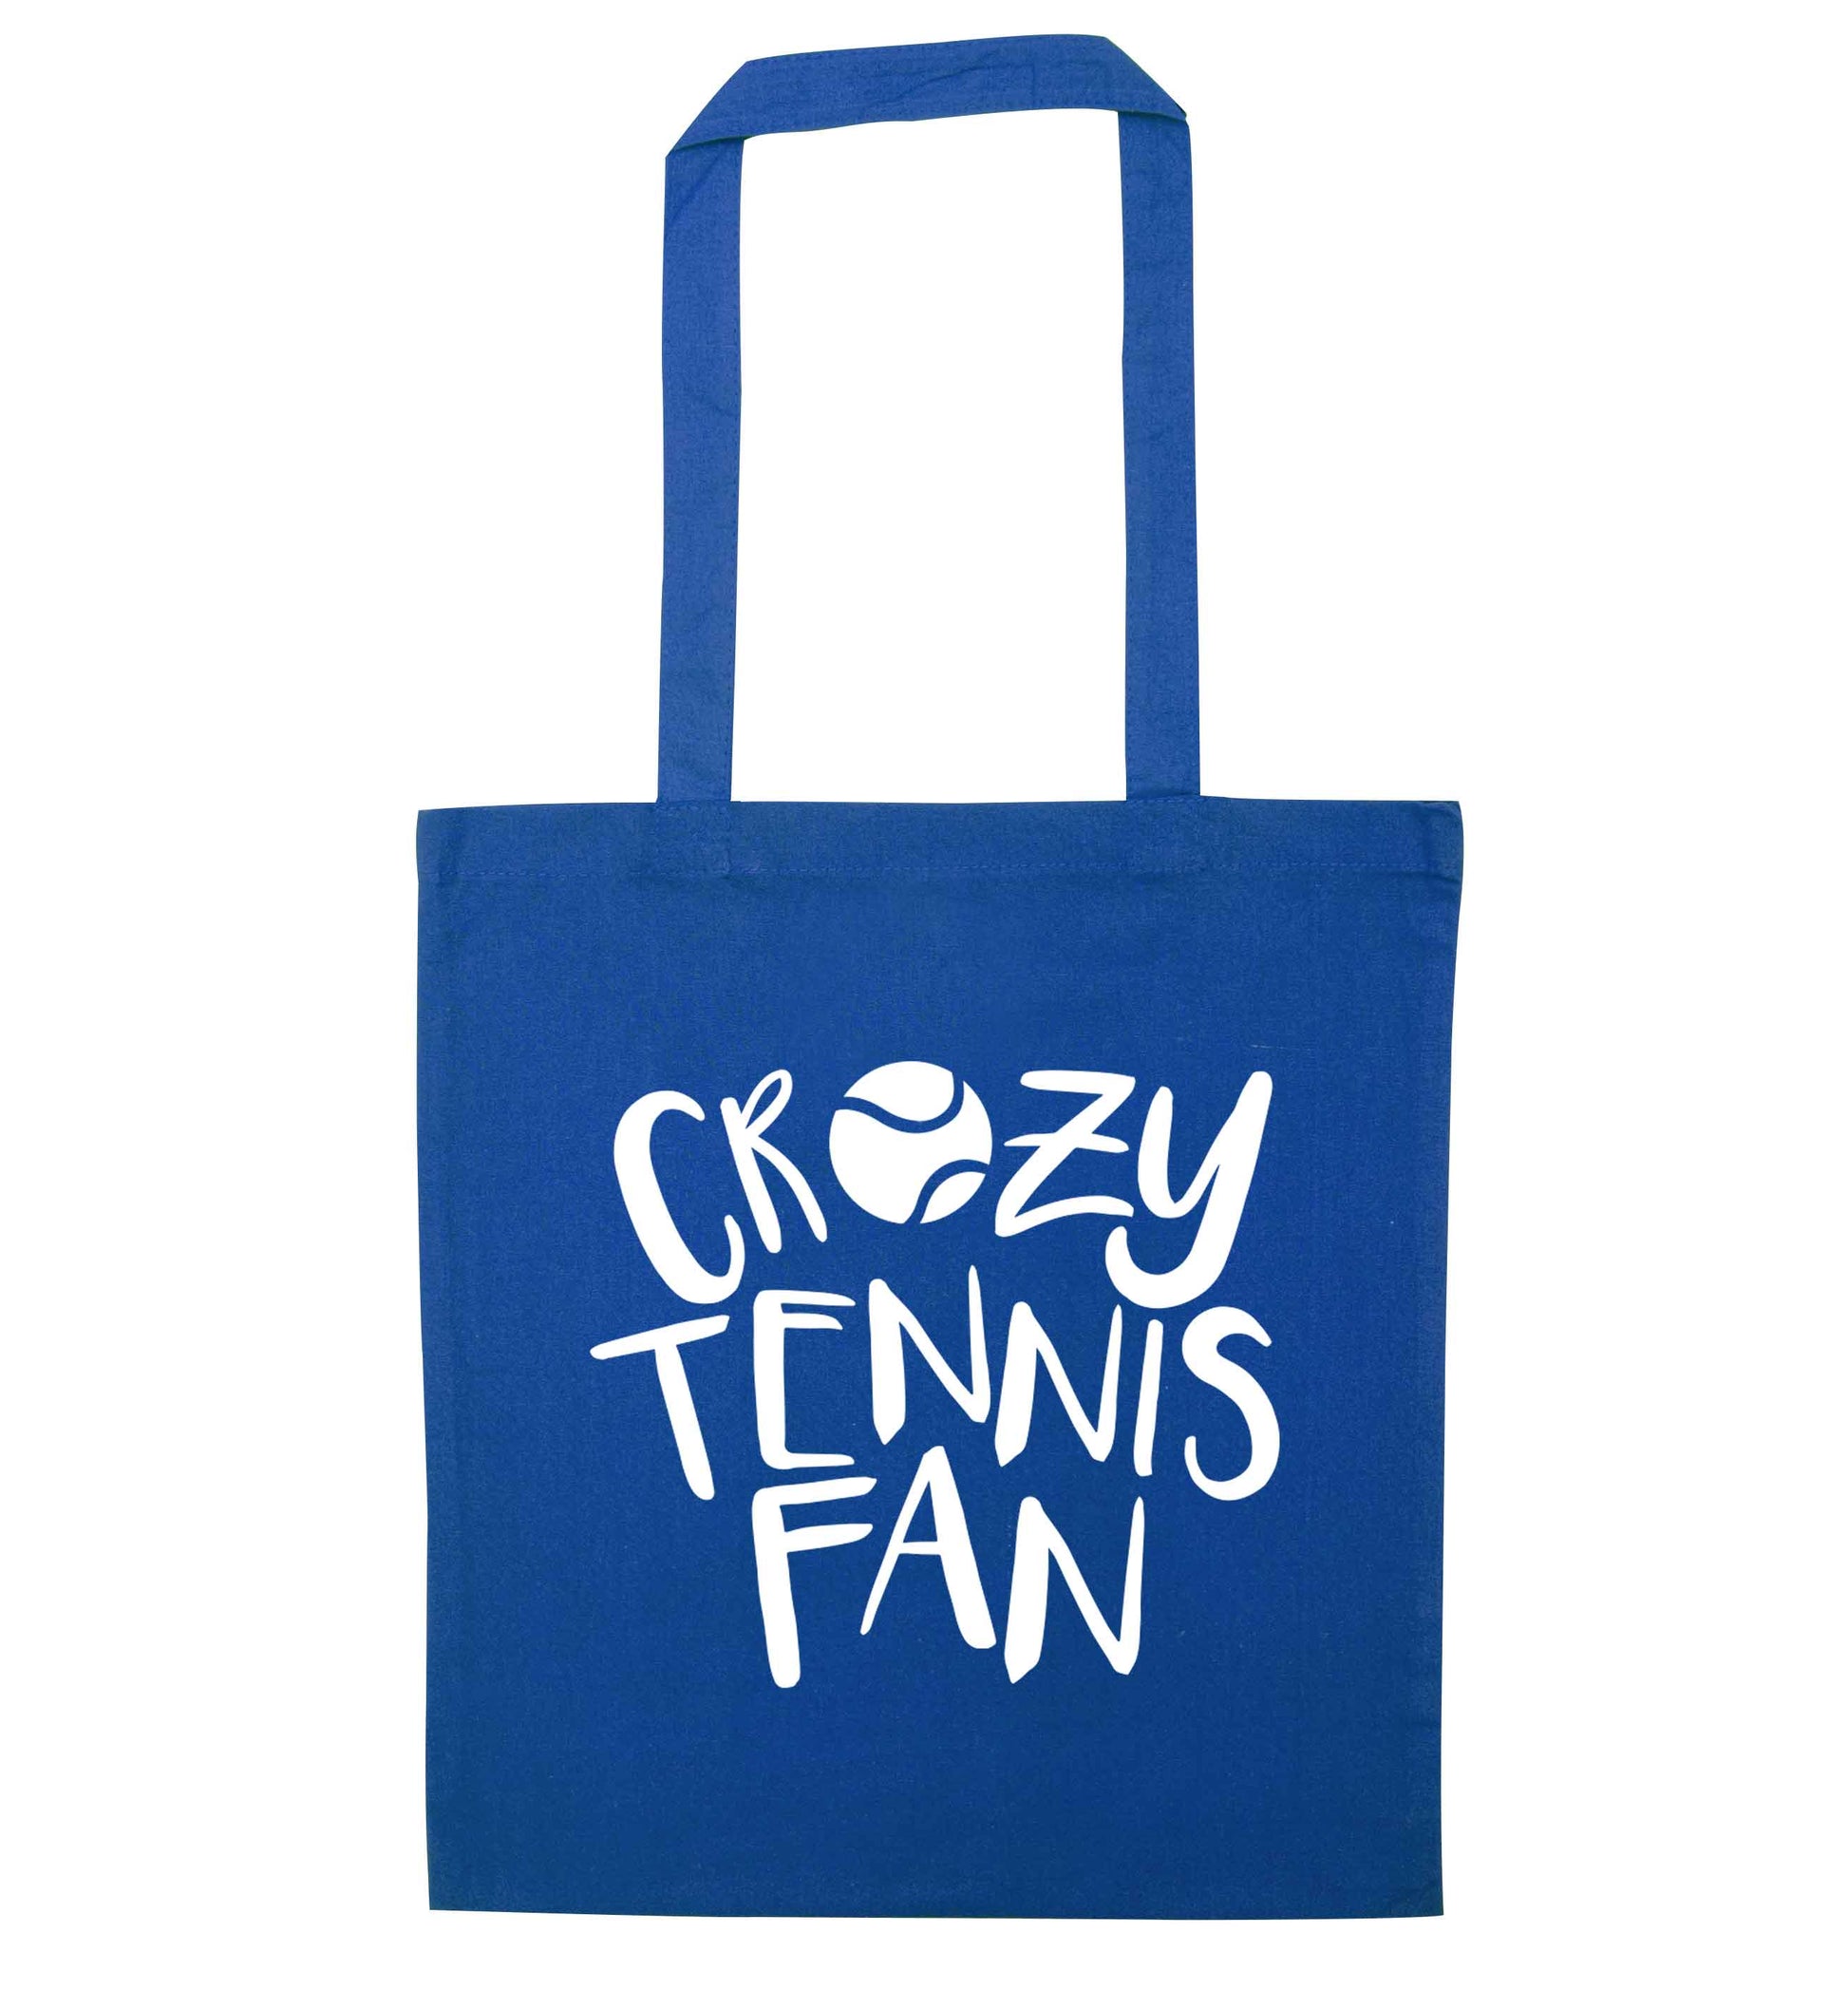 Crazy tennis fan blue tote bag